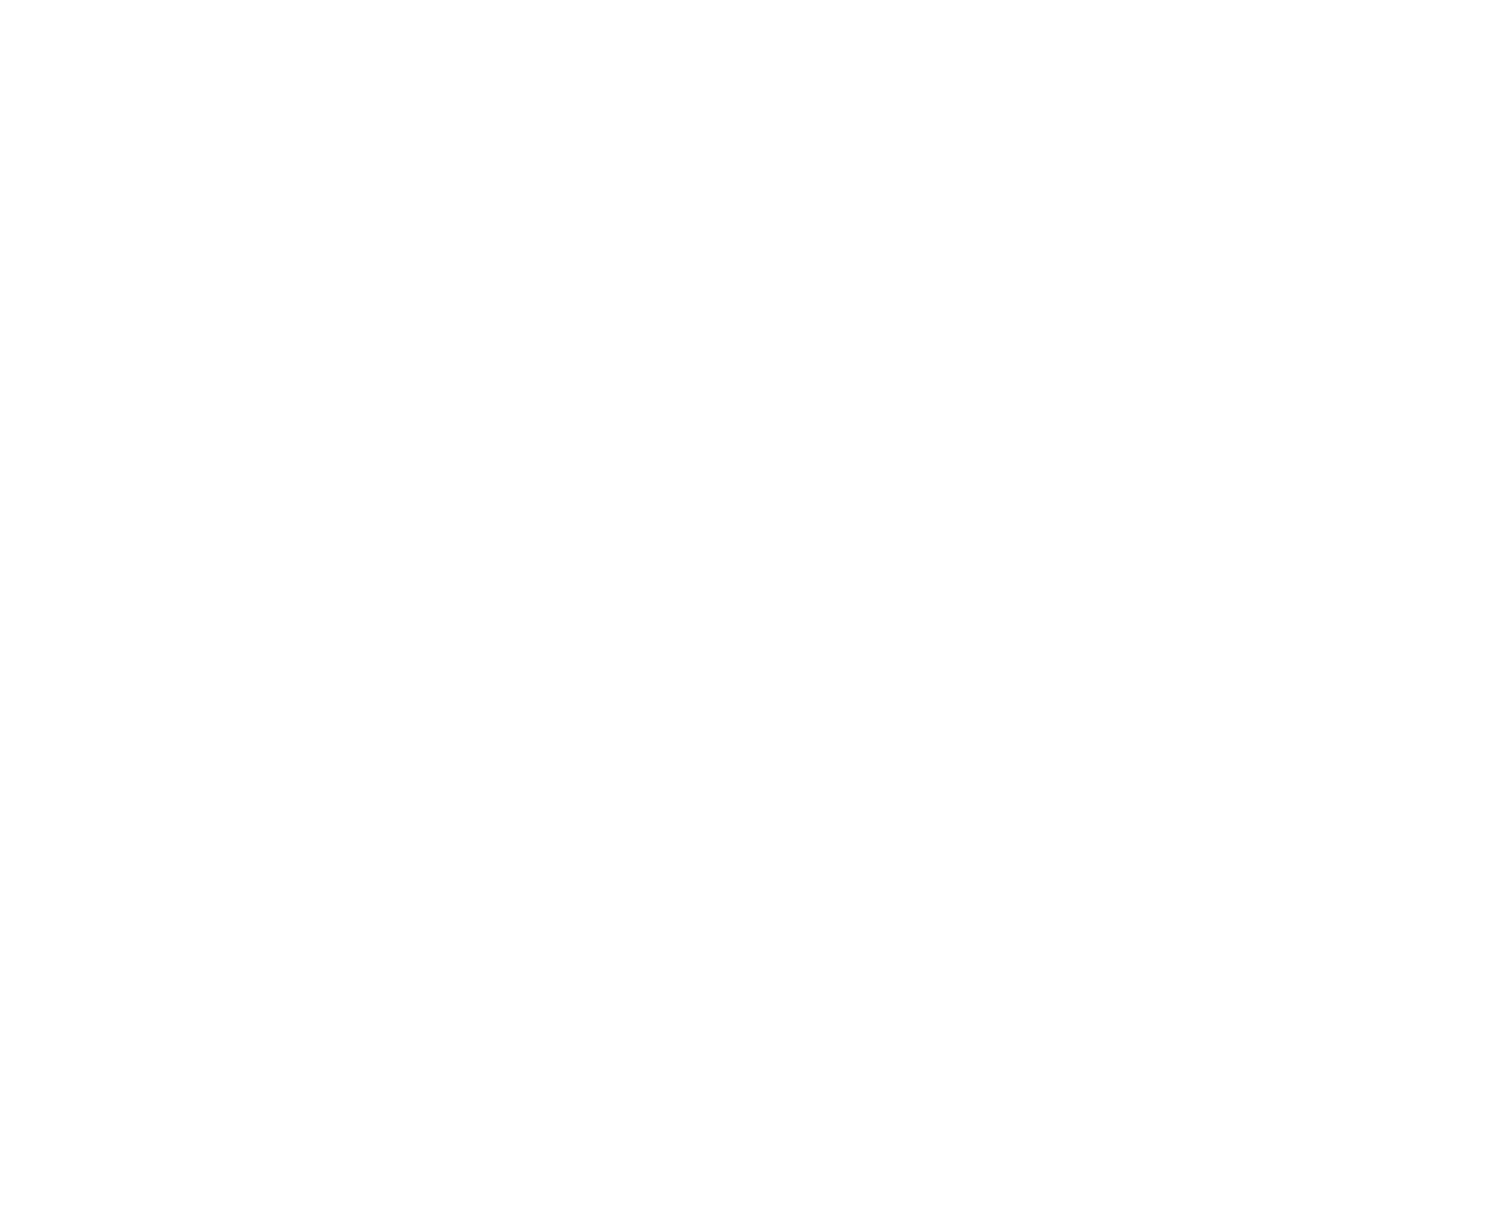  Windsor & Willow